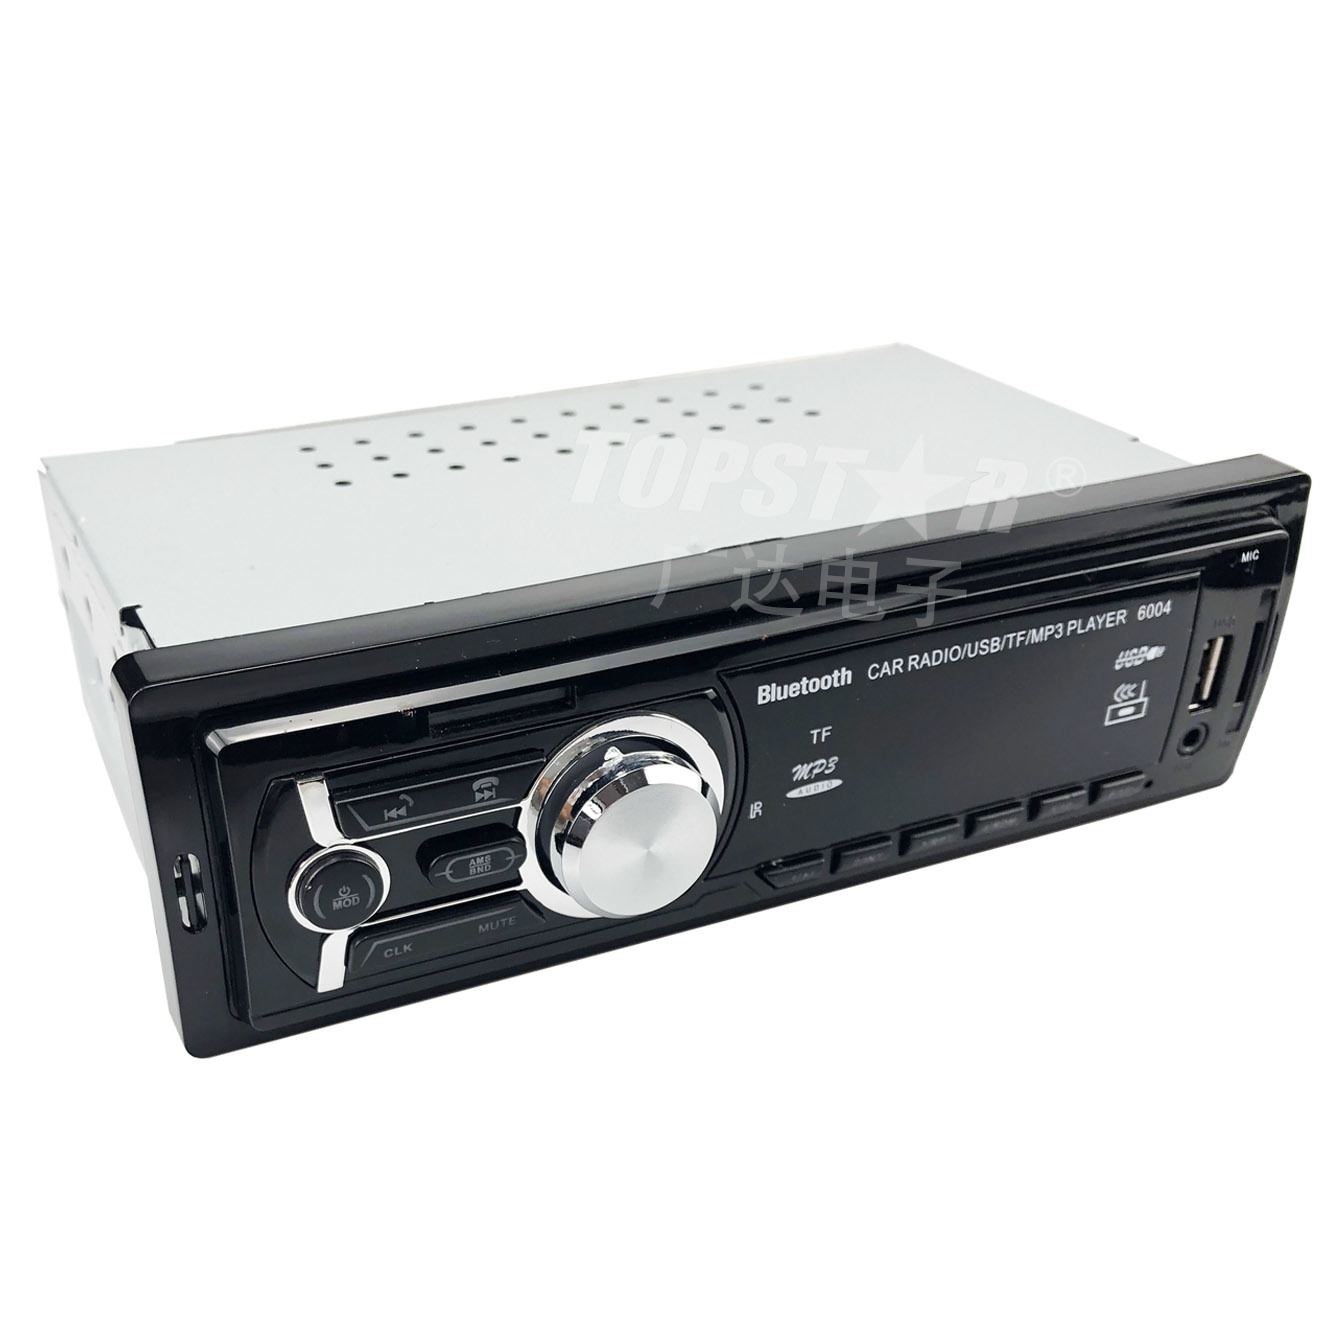 Reprodutor de mp3 para carro, reprodutor de vídeo estéreo para carro, áudio mp3, áudio estéreo automático, painel fixo, reprodutor de mp3 estéreo para carro